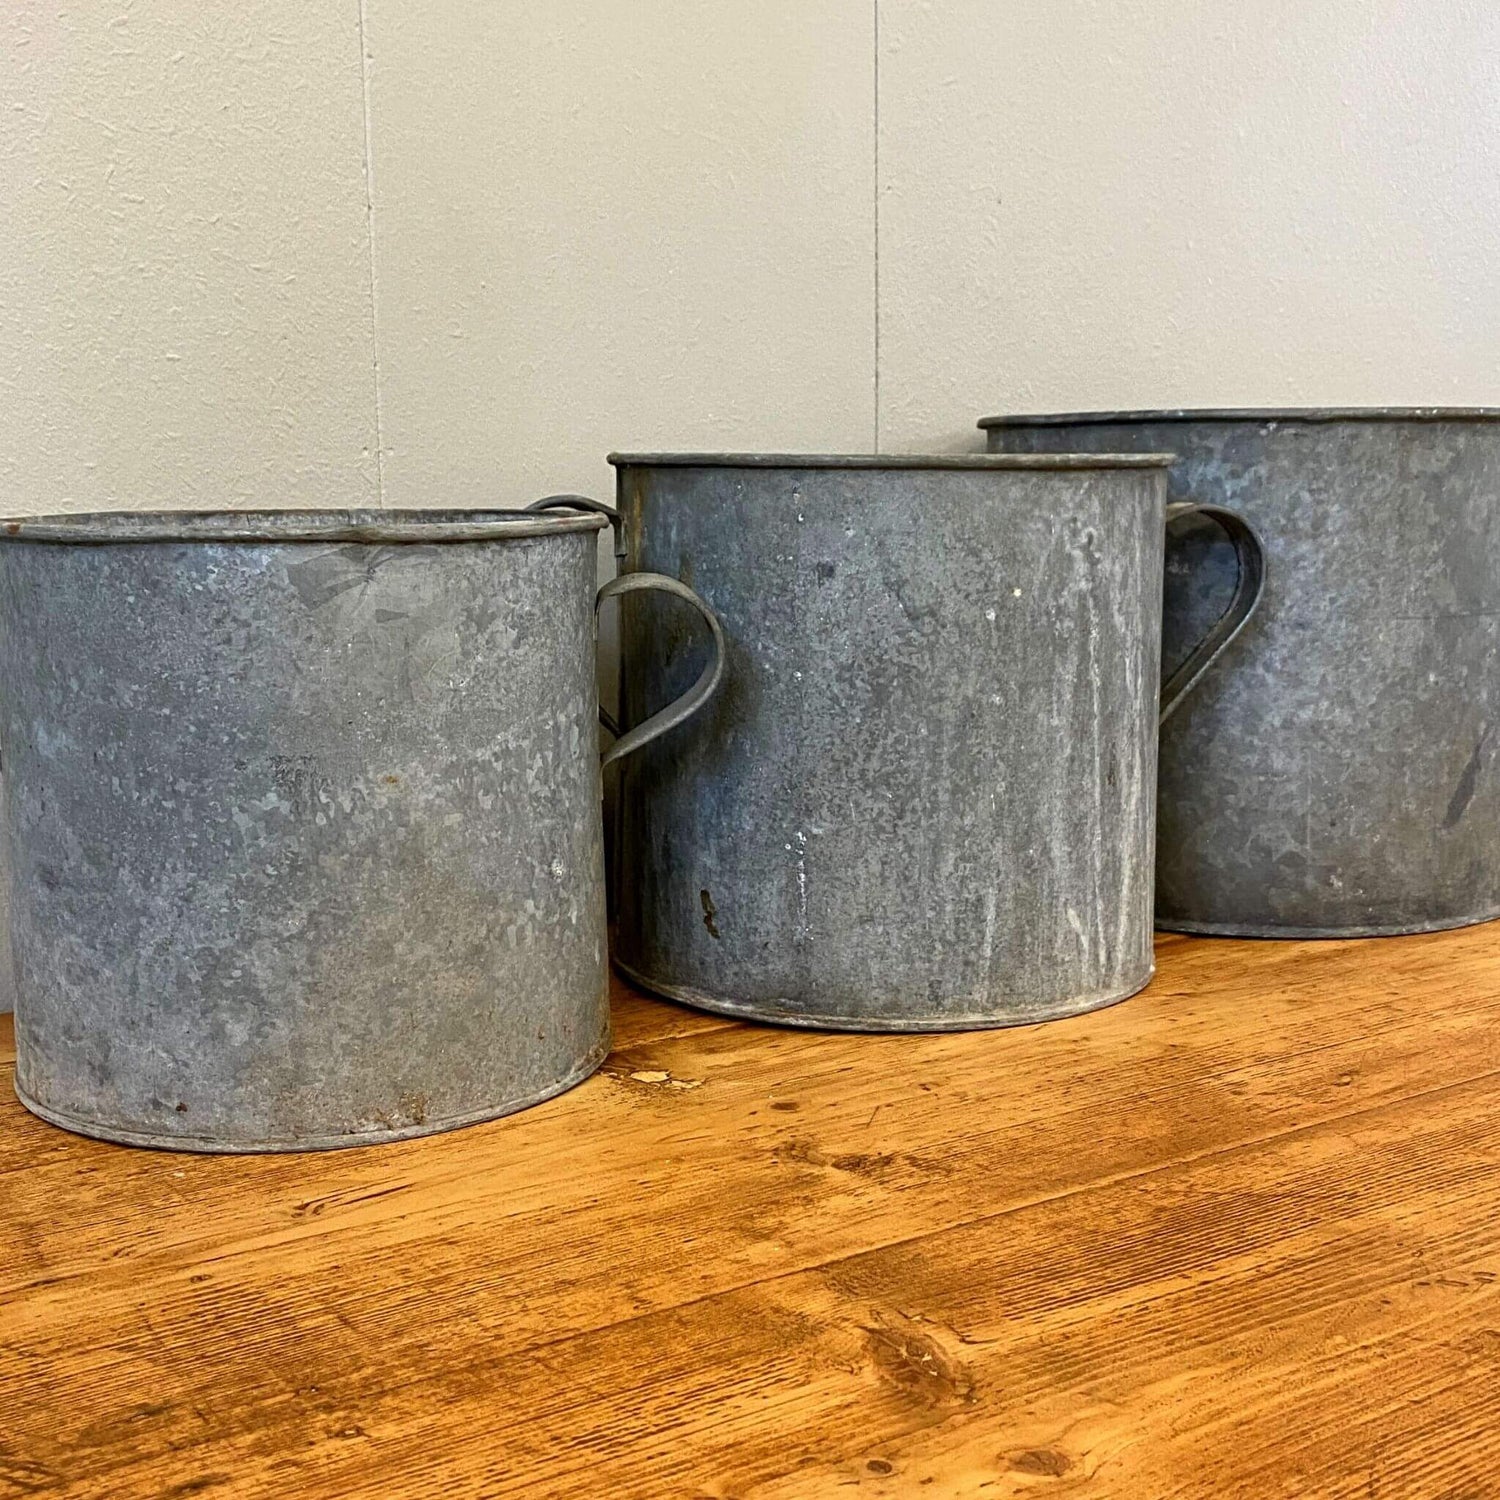 Vintage Galvanized Farm Buckets